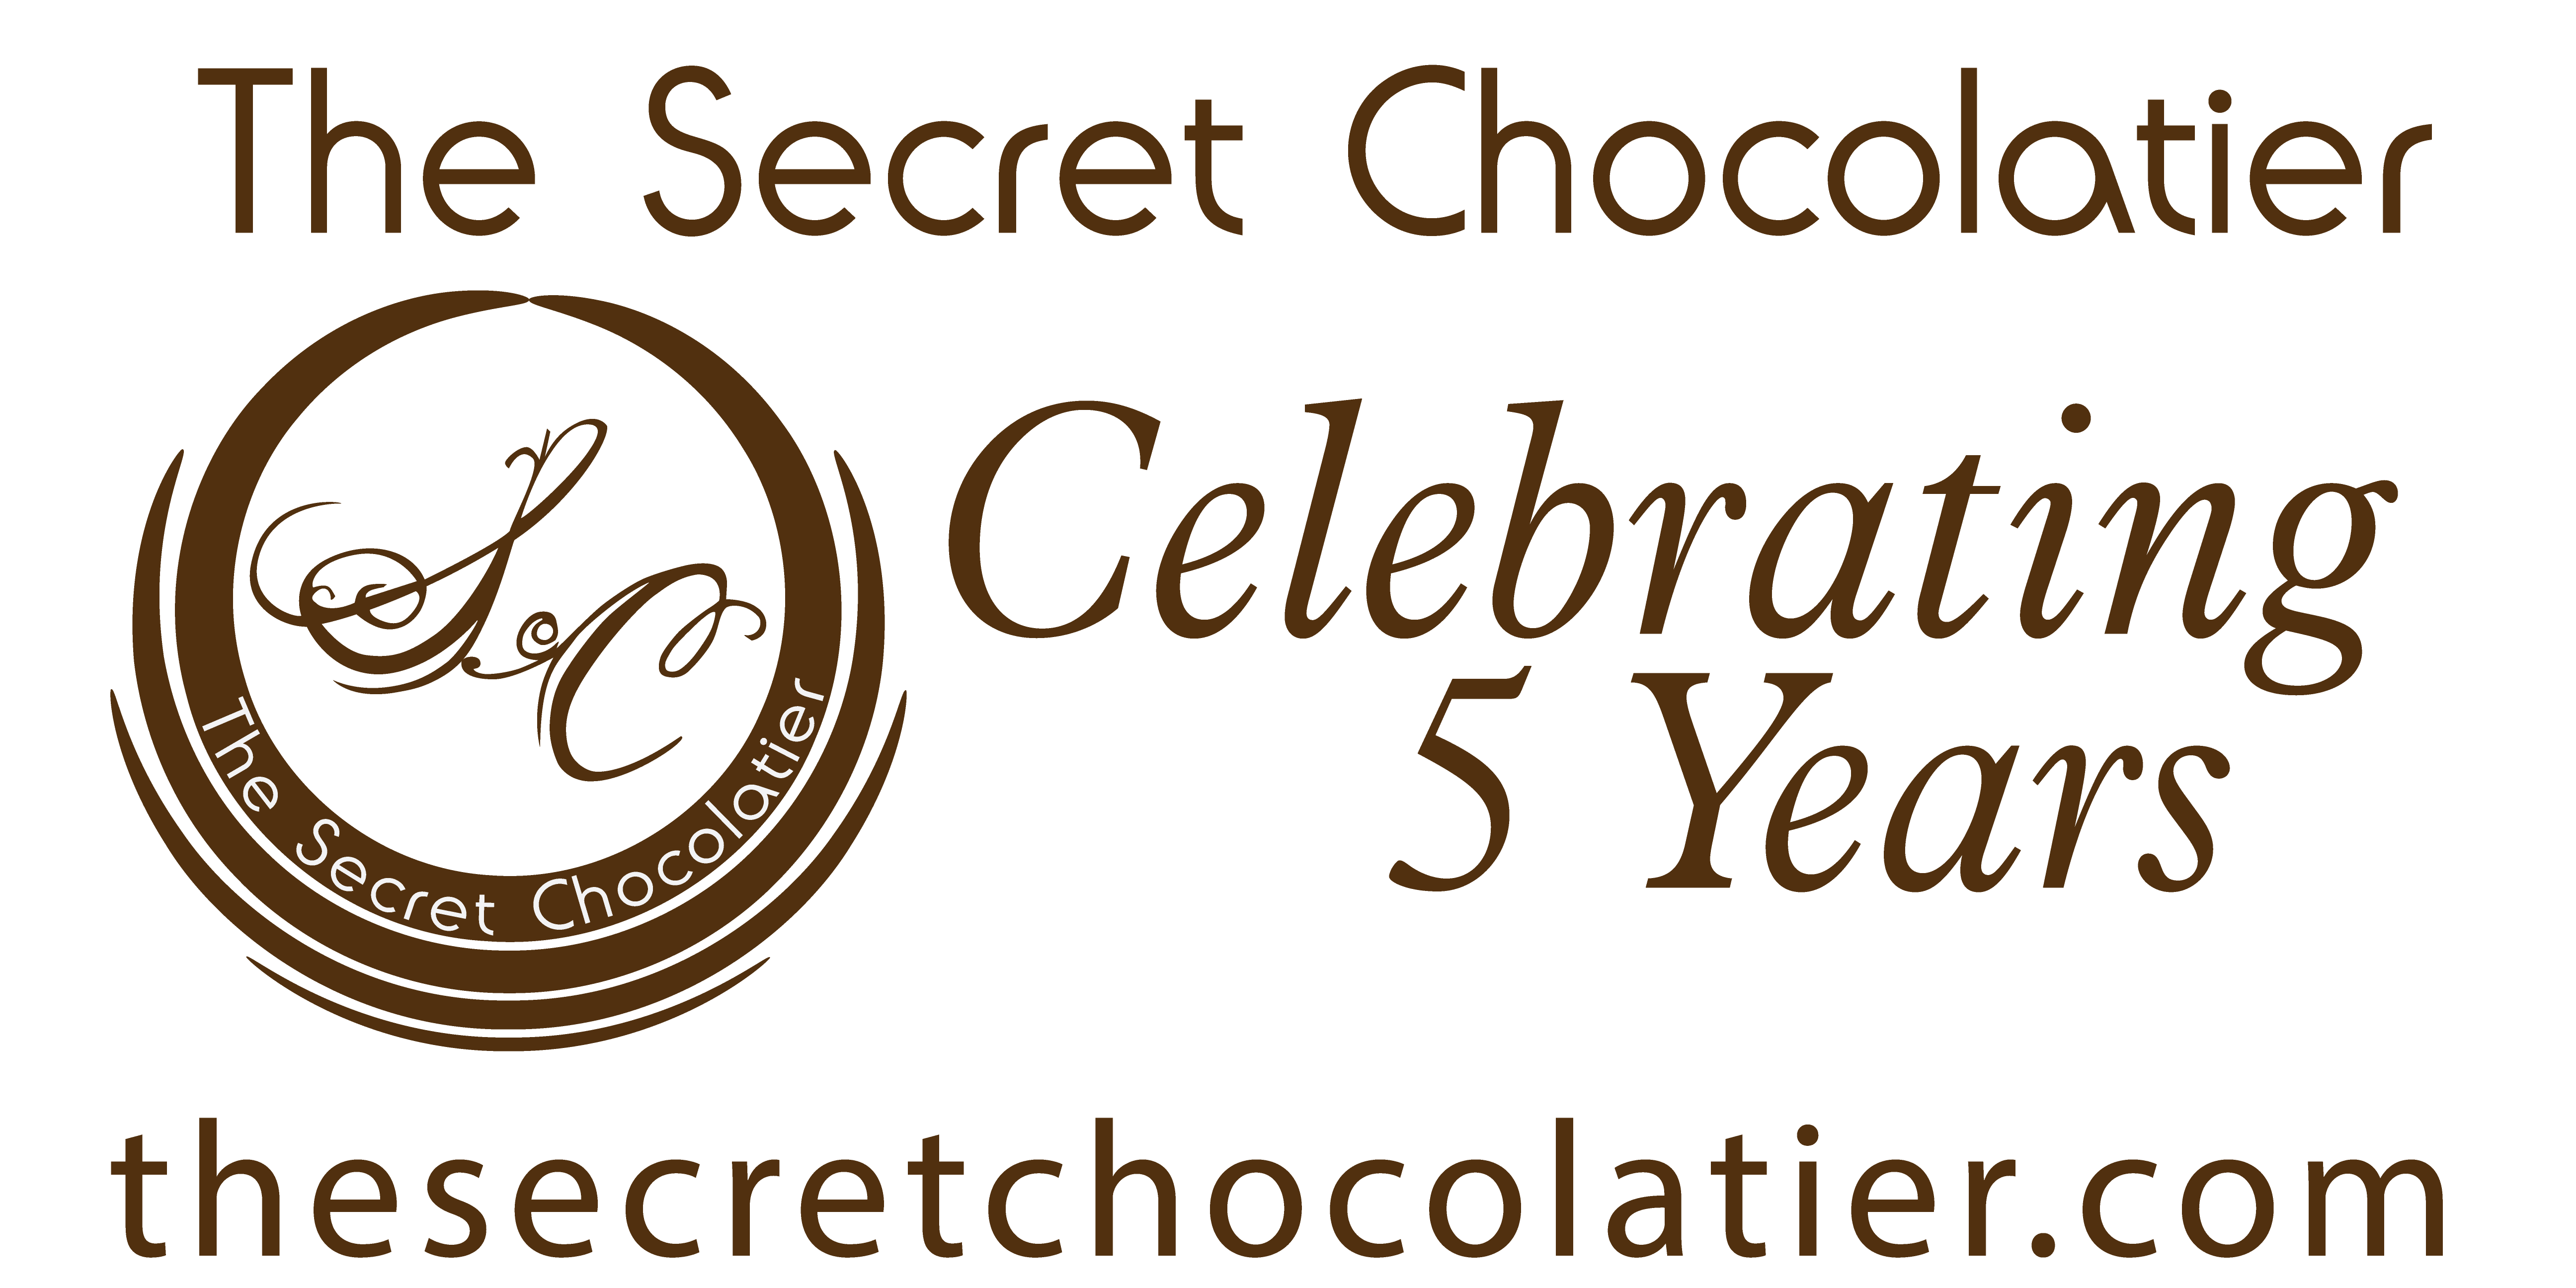 The Secret Chocolatier 5 Year Anniversary